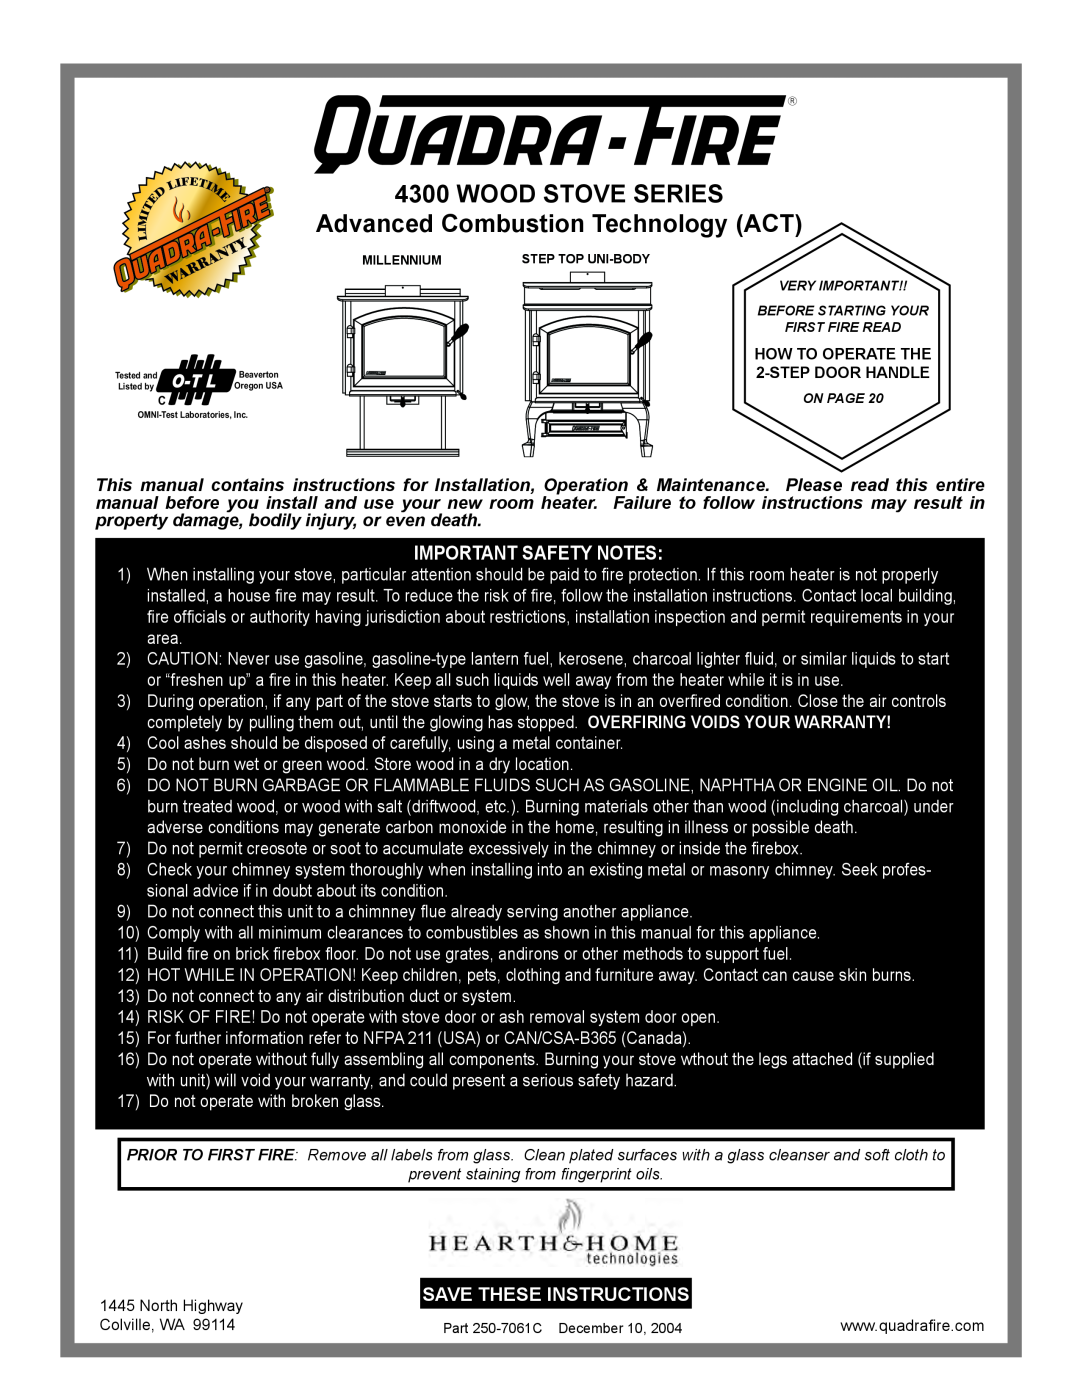 Quadra-Fire 4300 WOOD STOVE SERIES installation instructions Wood Stove Series, Advanced Combustion Technology ACT, O-Tl 